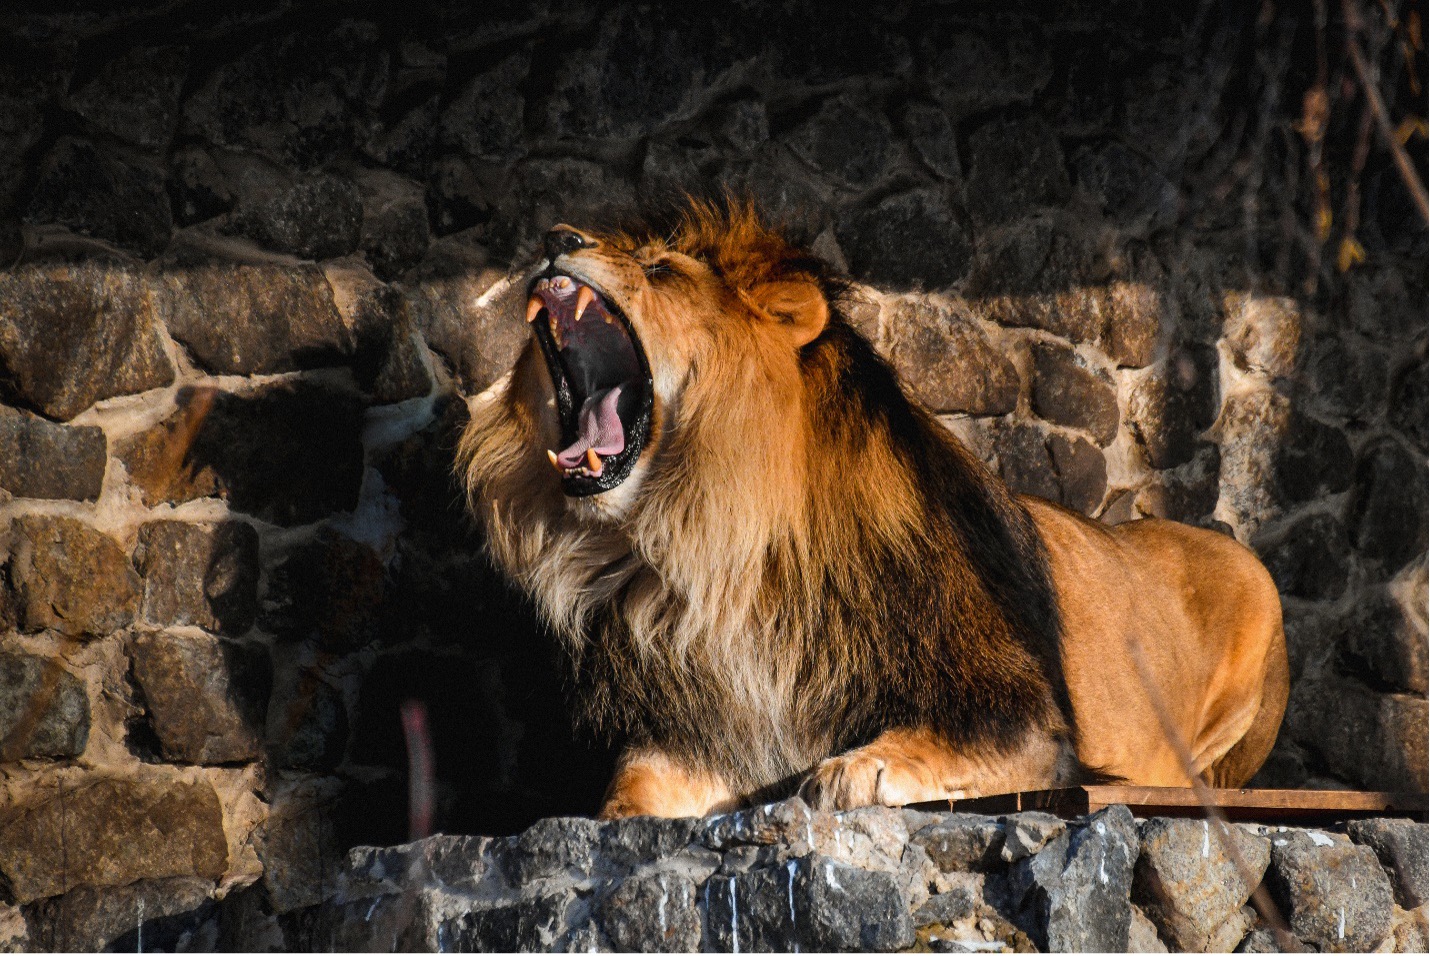 Male lion yawns a little before feeding time at the Kyiv City Zoo. Dec. 10 photo by Stefan Korshak.